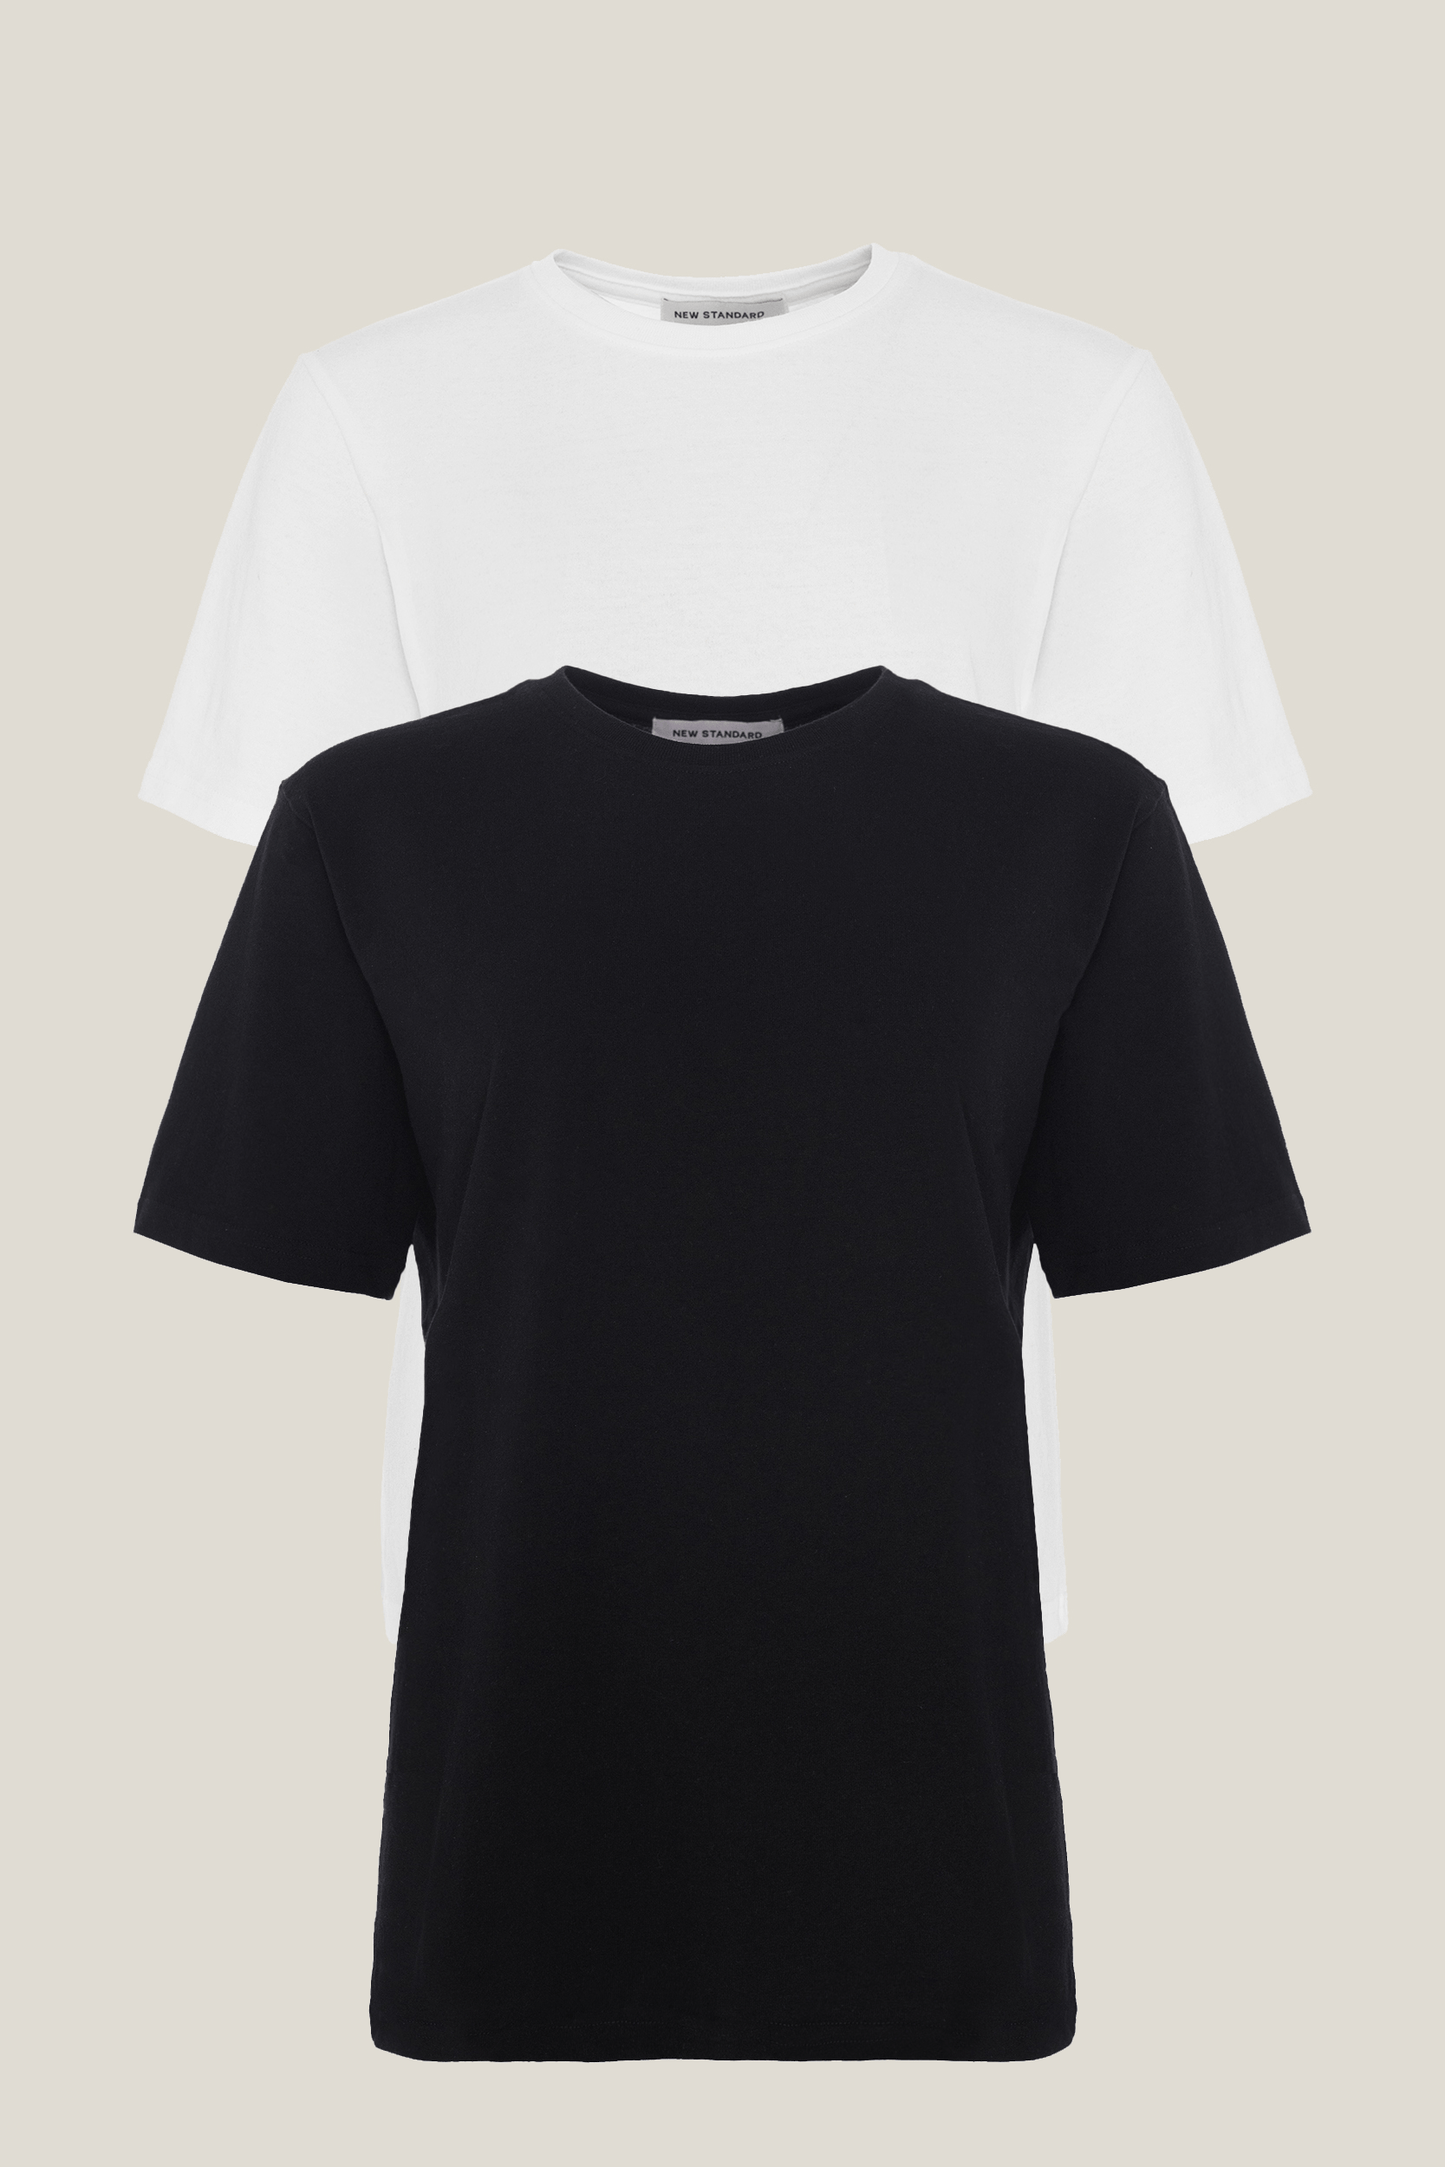 Women's t-shirt - Black and white (2-pack)